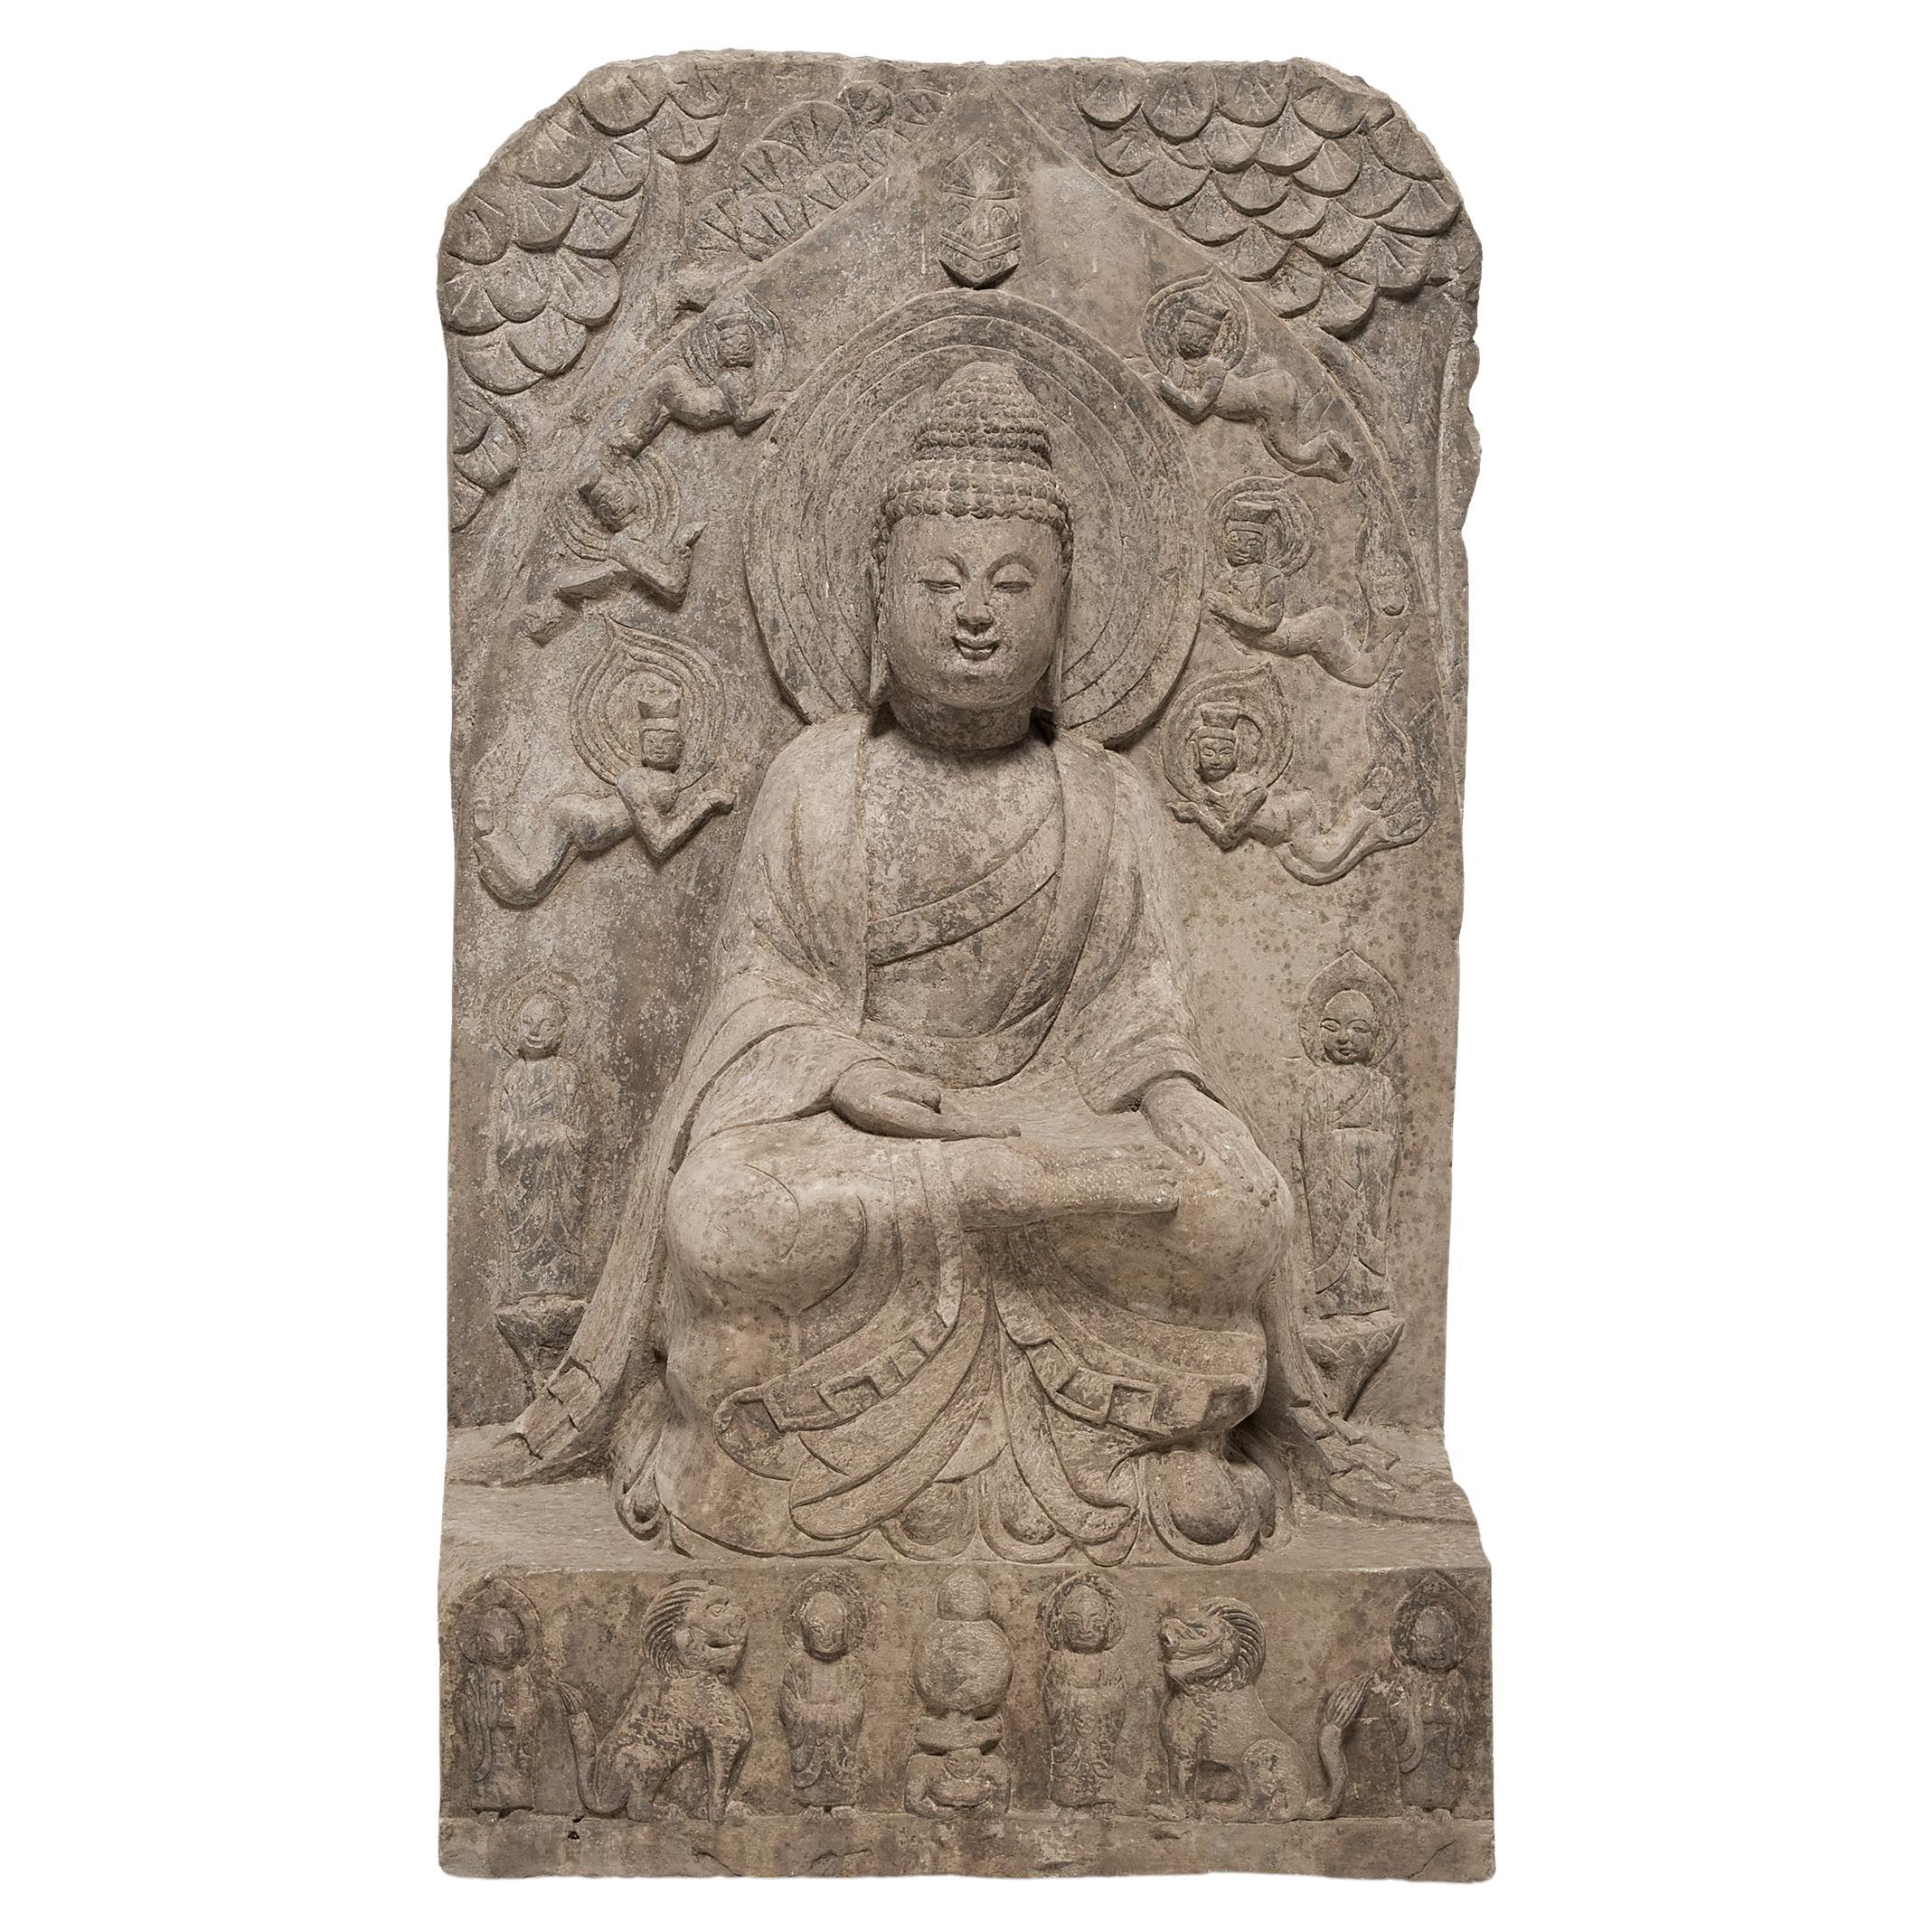 Stele de Bouddha Shakyamuni assis en pierre chinoise, vers 1850